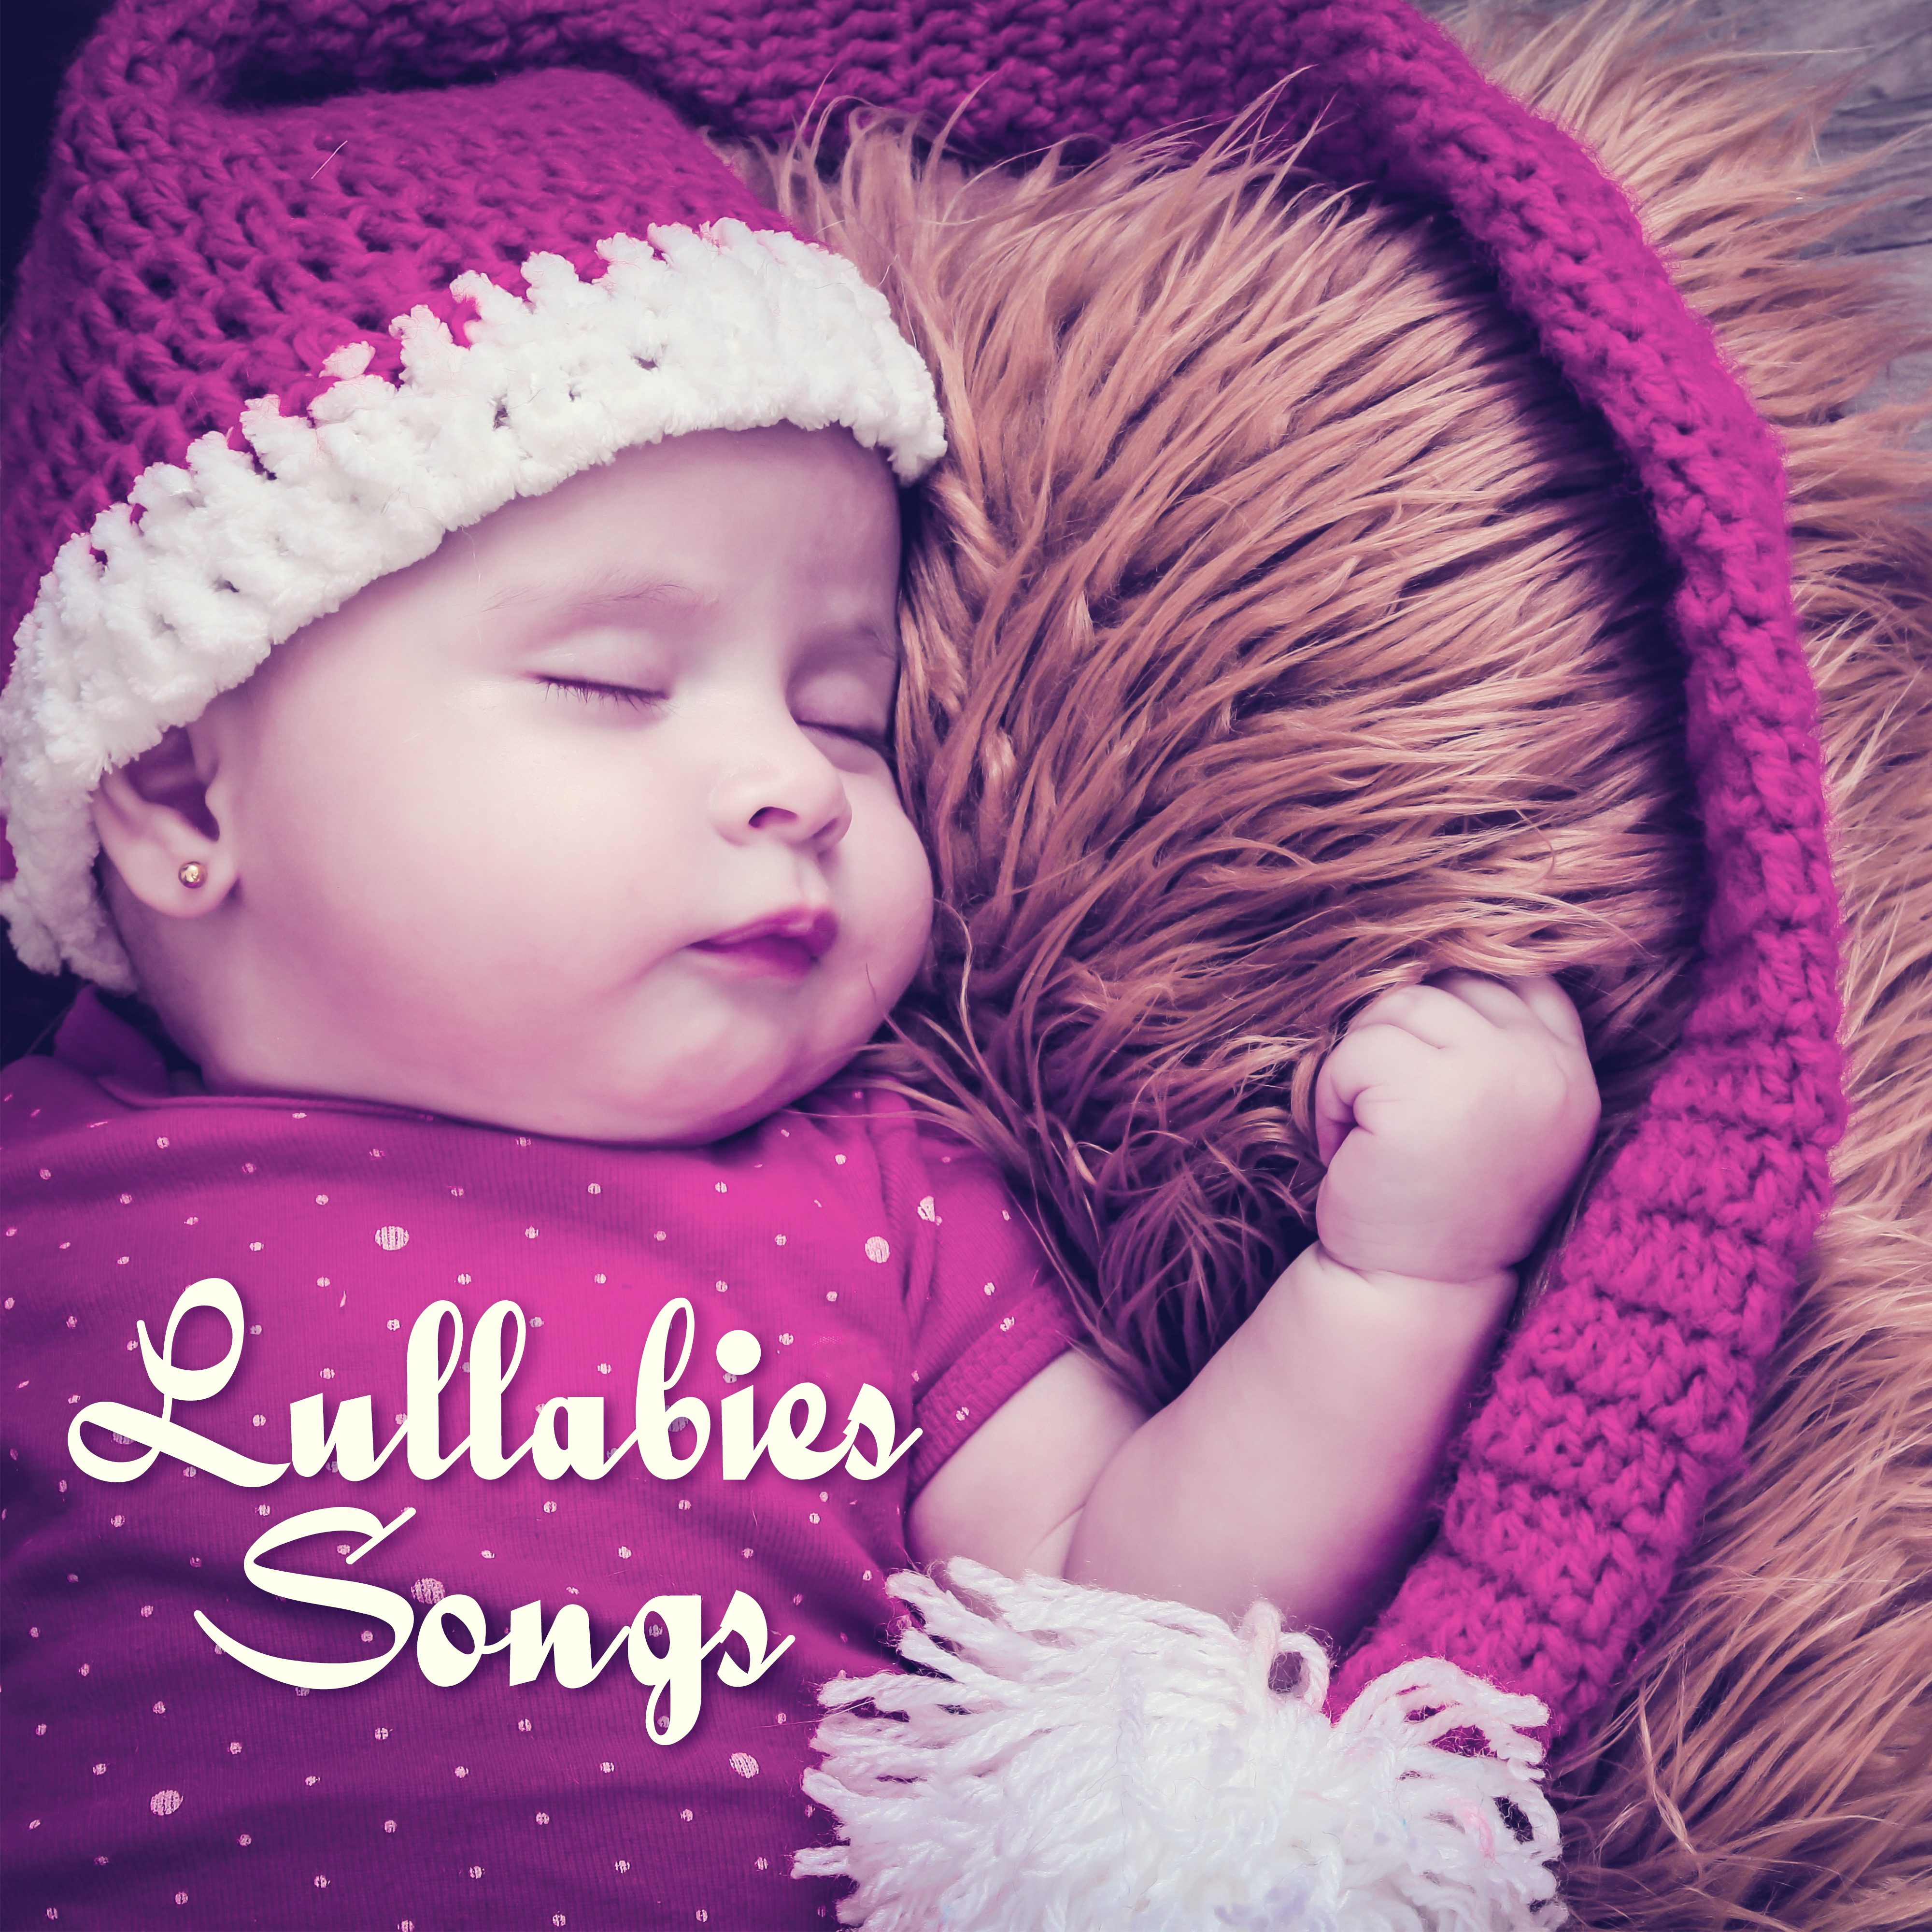 Lullabies Songs – Baby Music, Lullabies for Put to Sleep, Music for Deep Sleep, Relaxation, Stimulation Baby Development